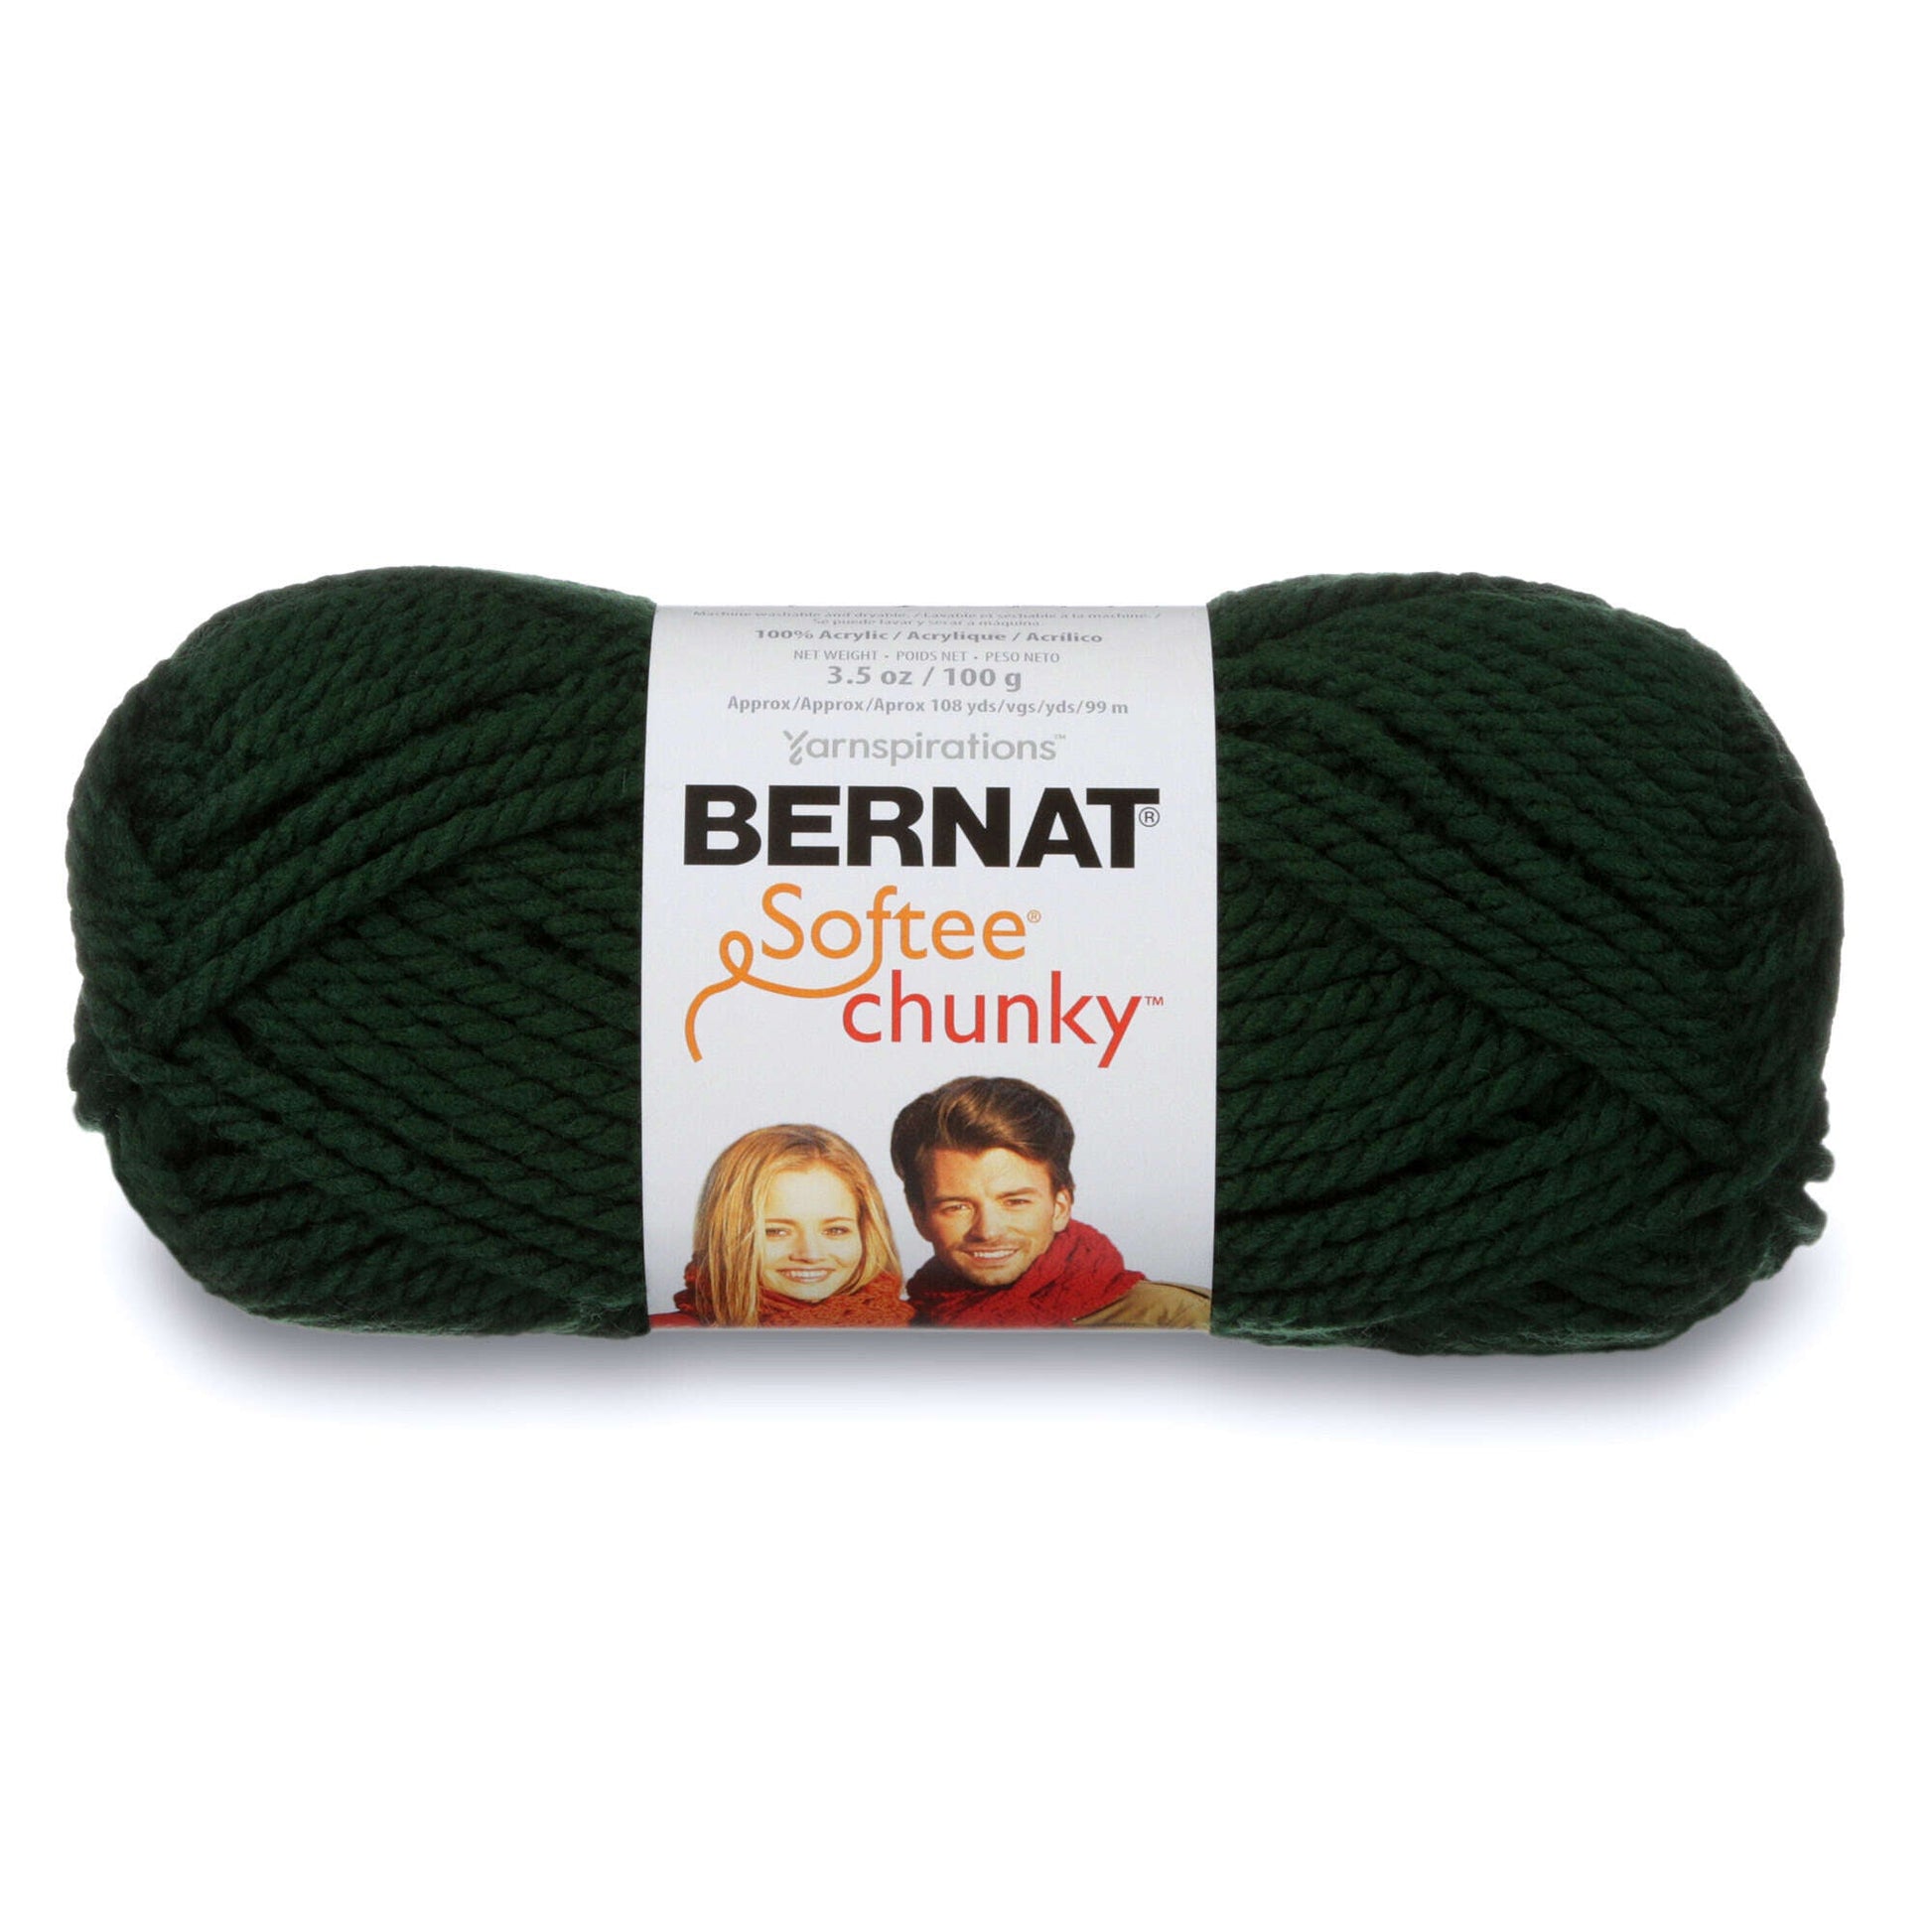 Bernat Softee Chunky Yarn (100g/3.5oz) - Discontinued shades